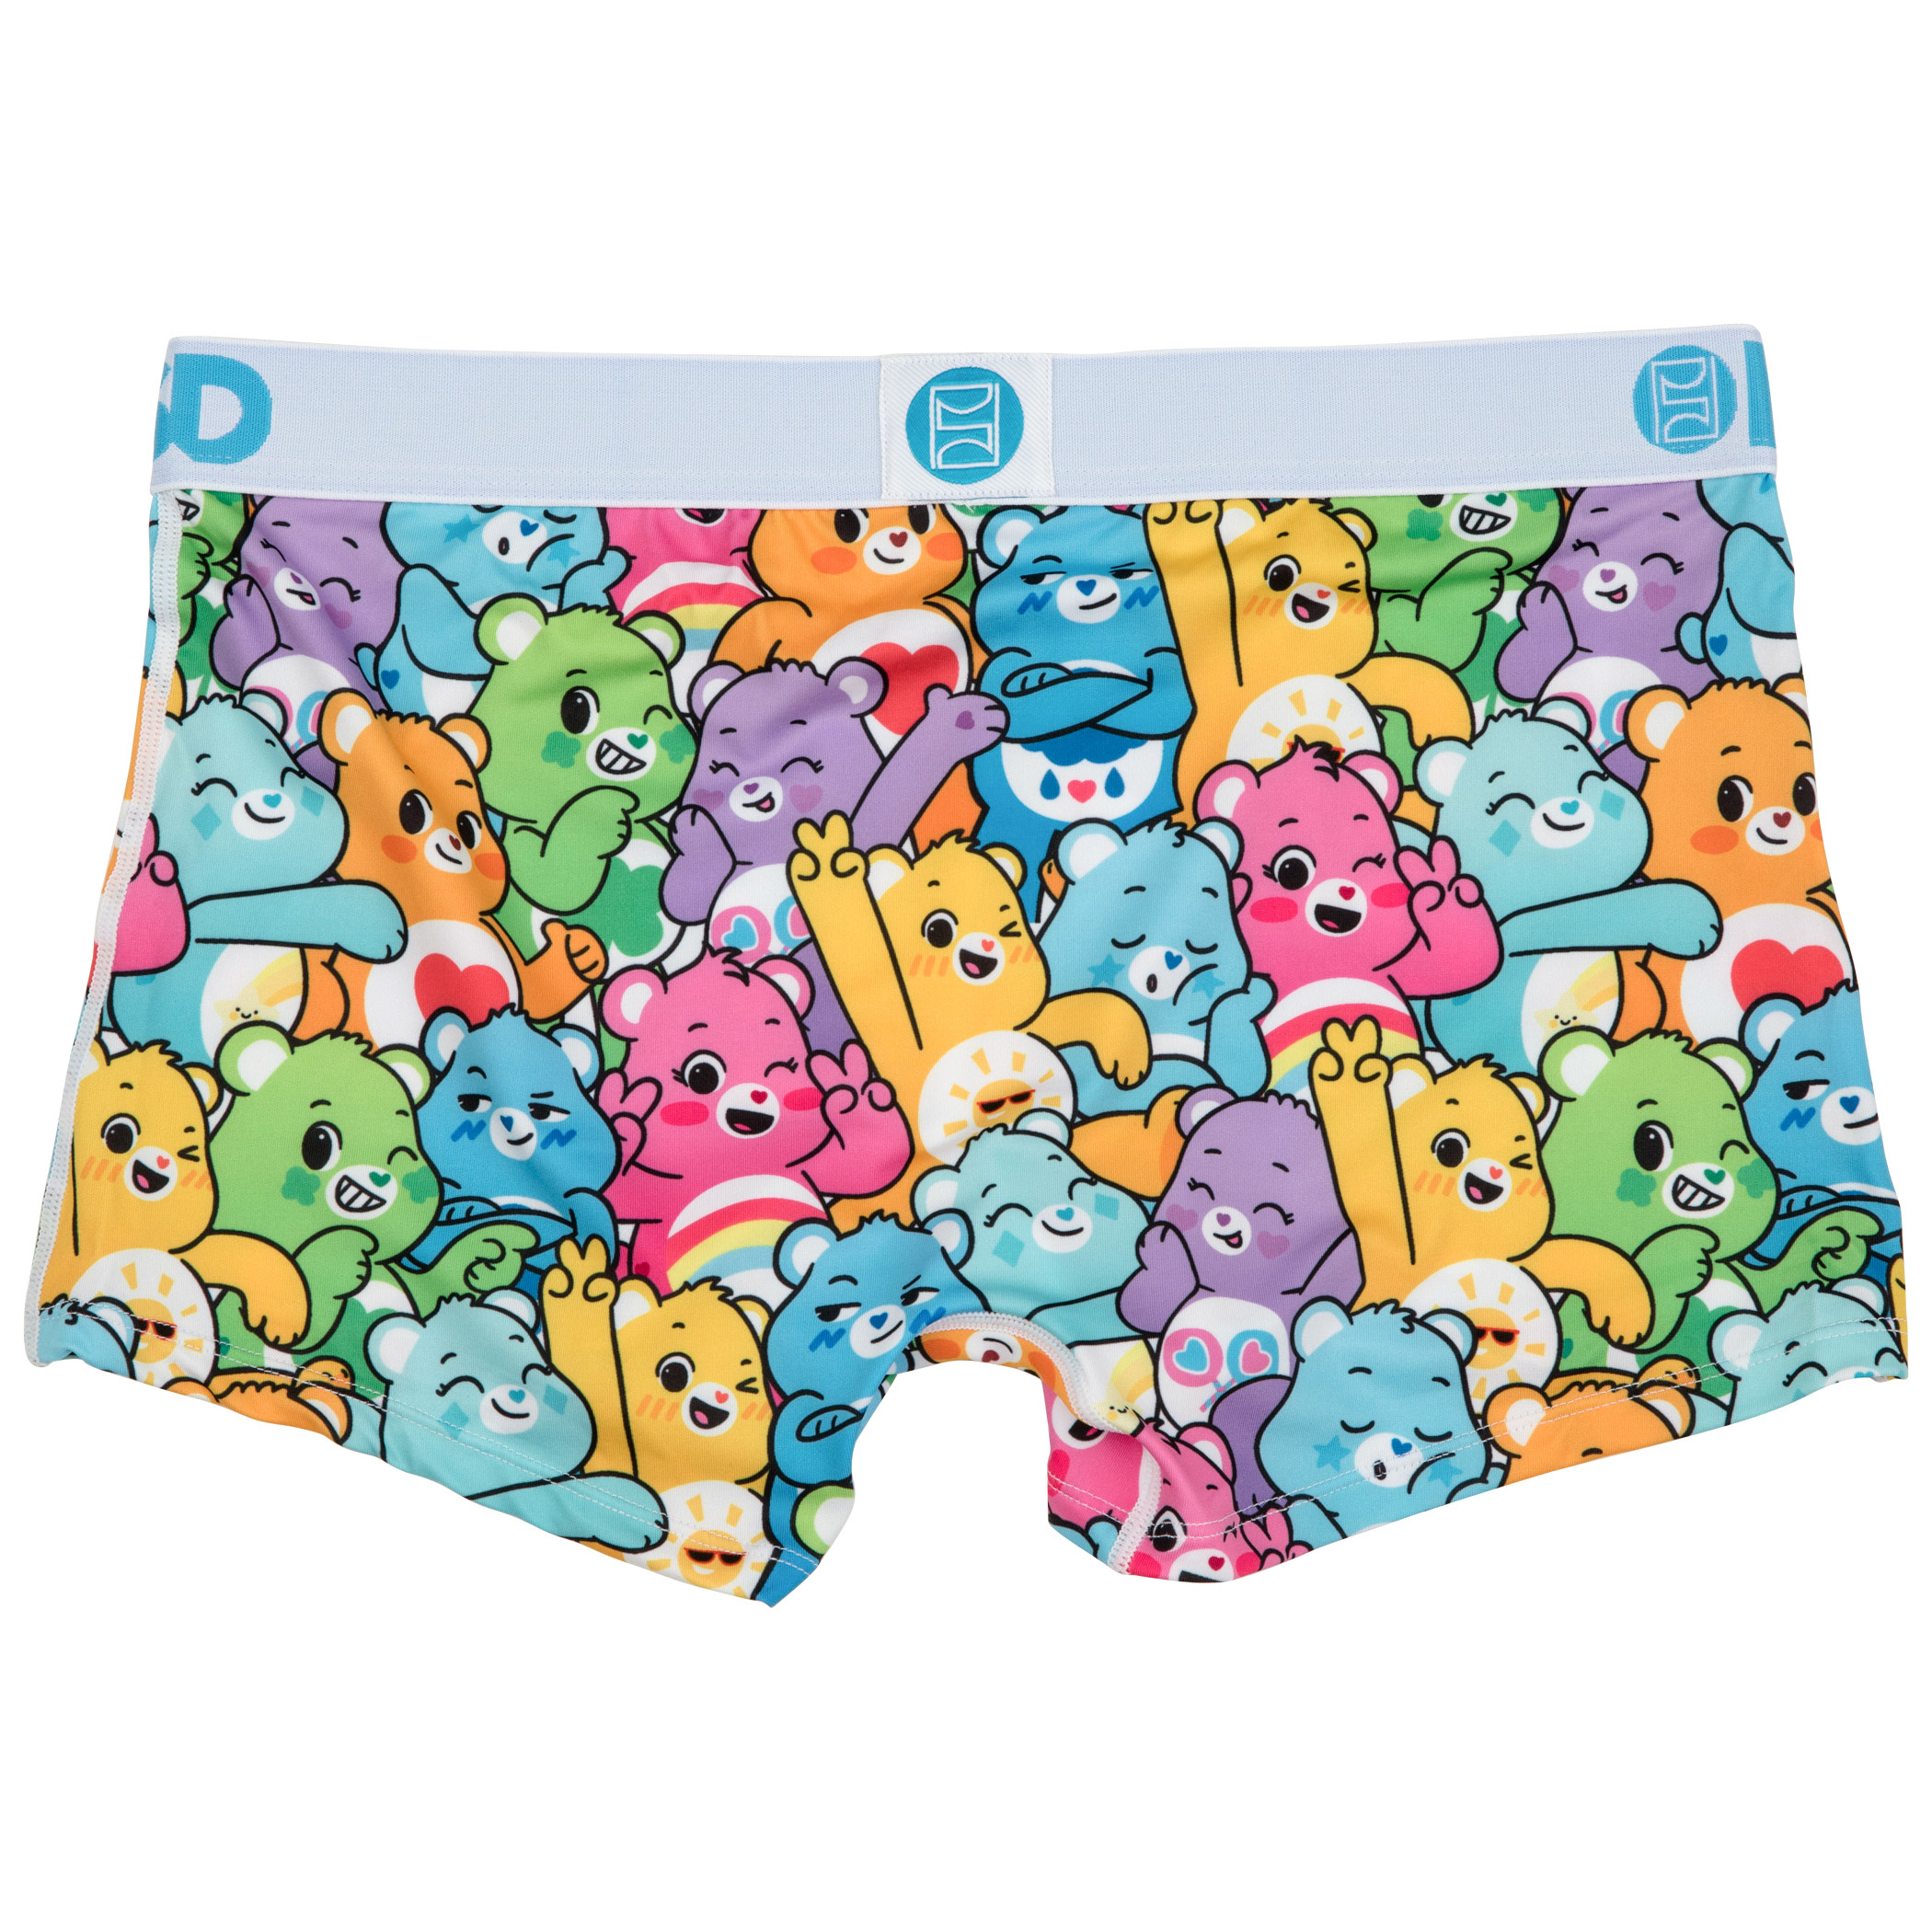 Care Bears Crew PSD Boy Shorts Underwear